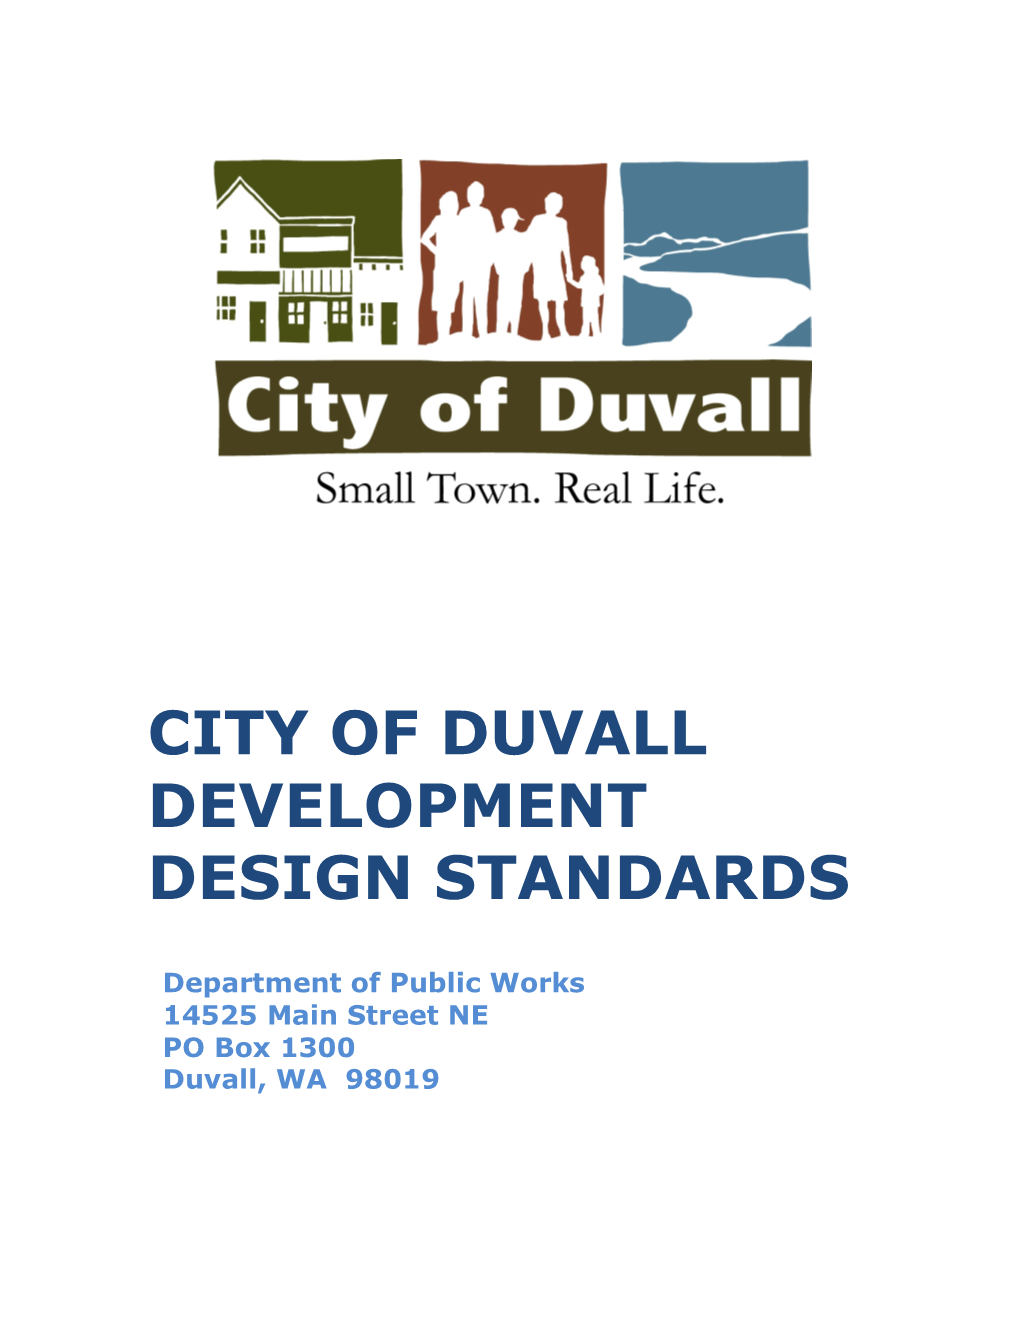 Development Design Standards